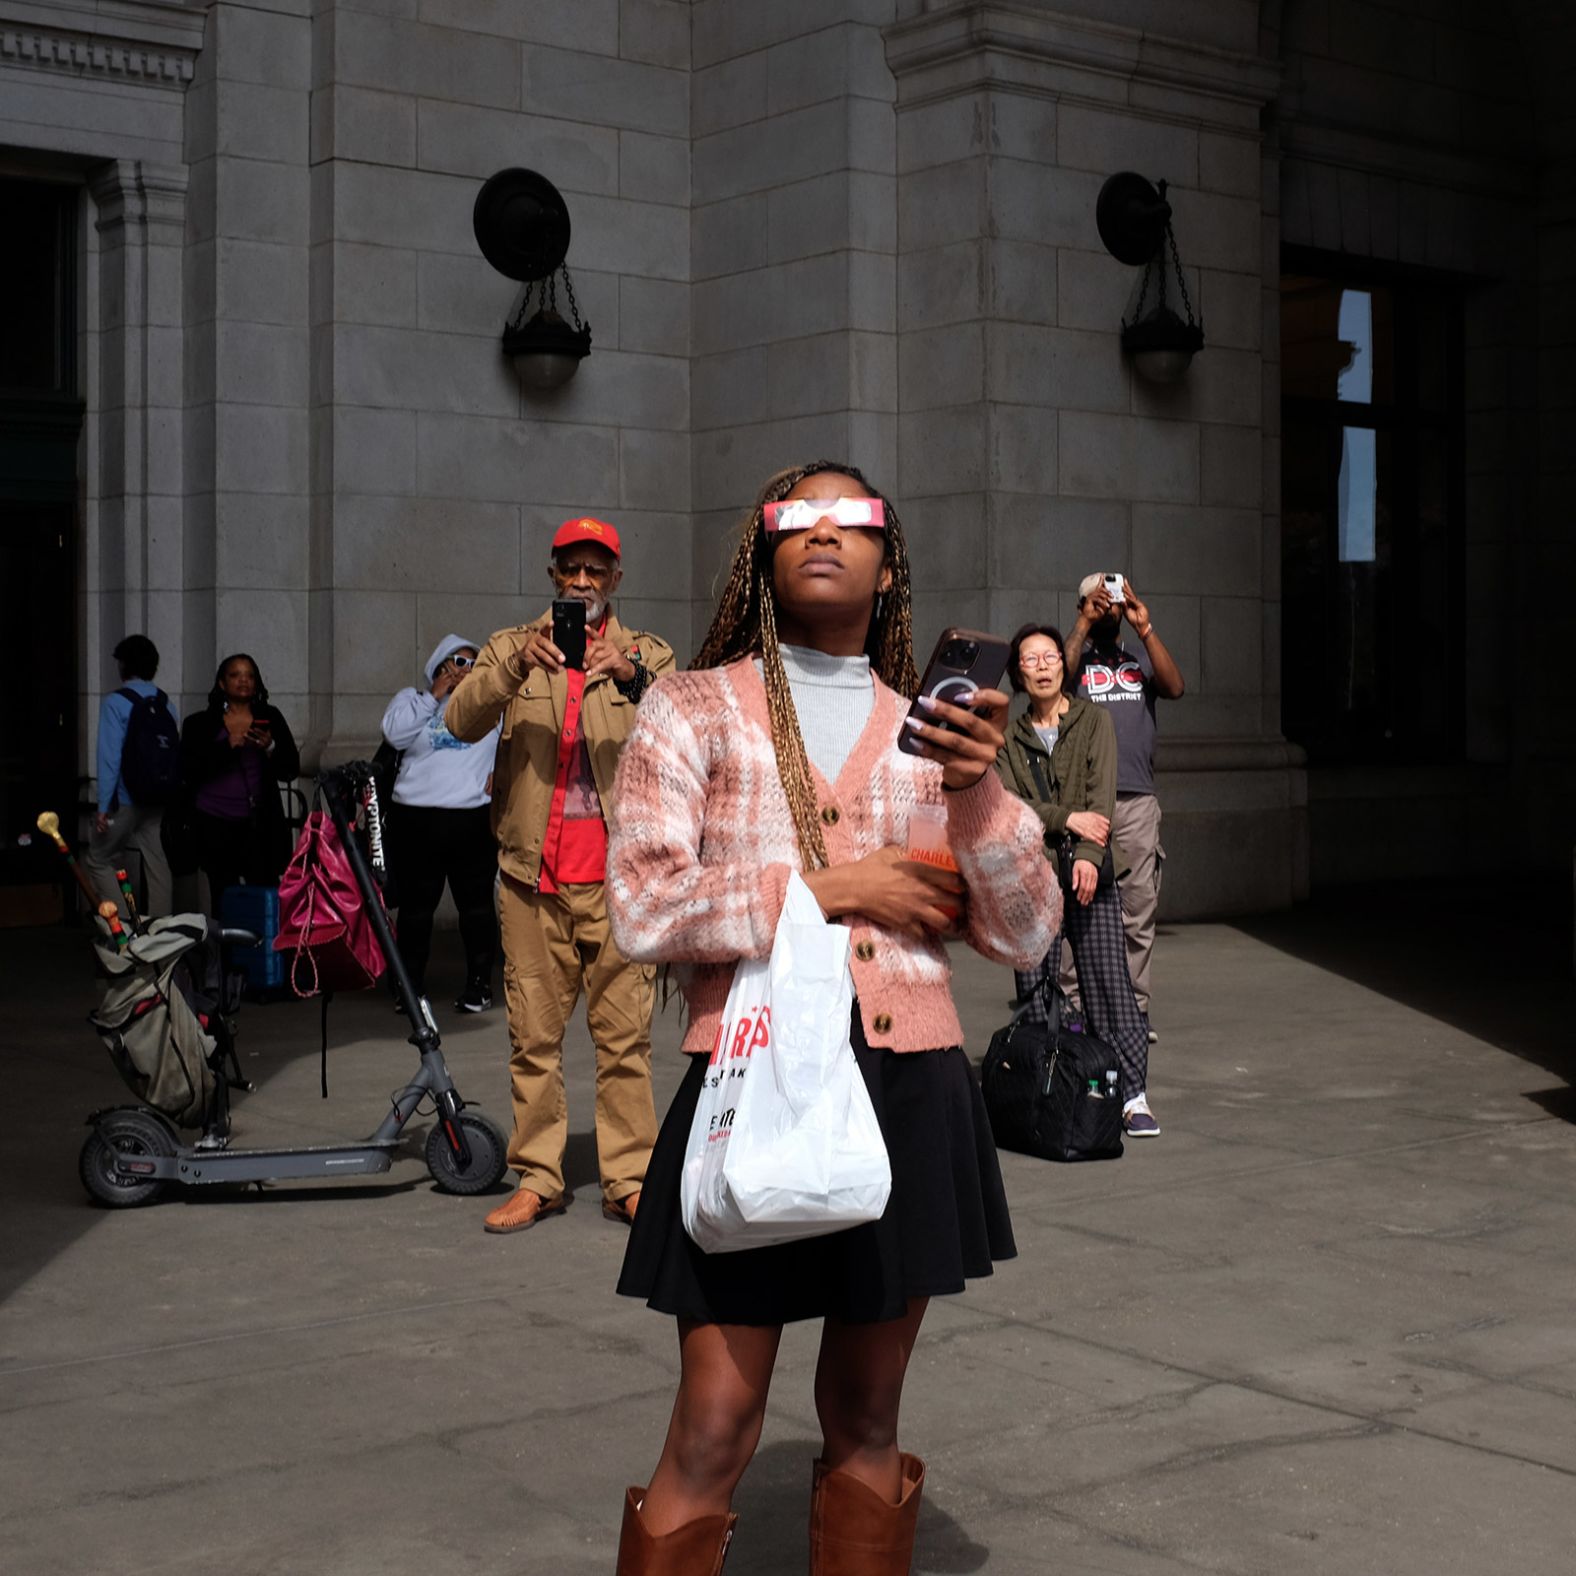 Nataya Tindle watches the eclipse outside of Union Station in Washington, DC.